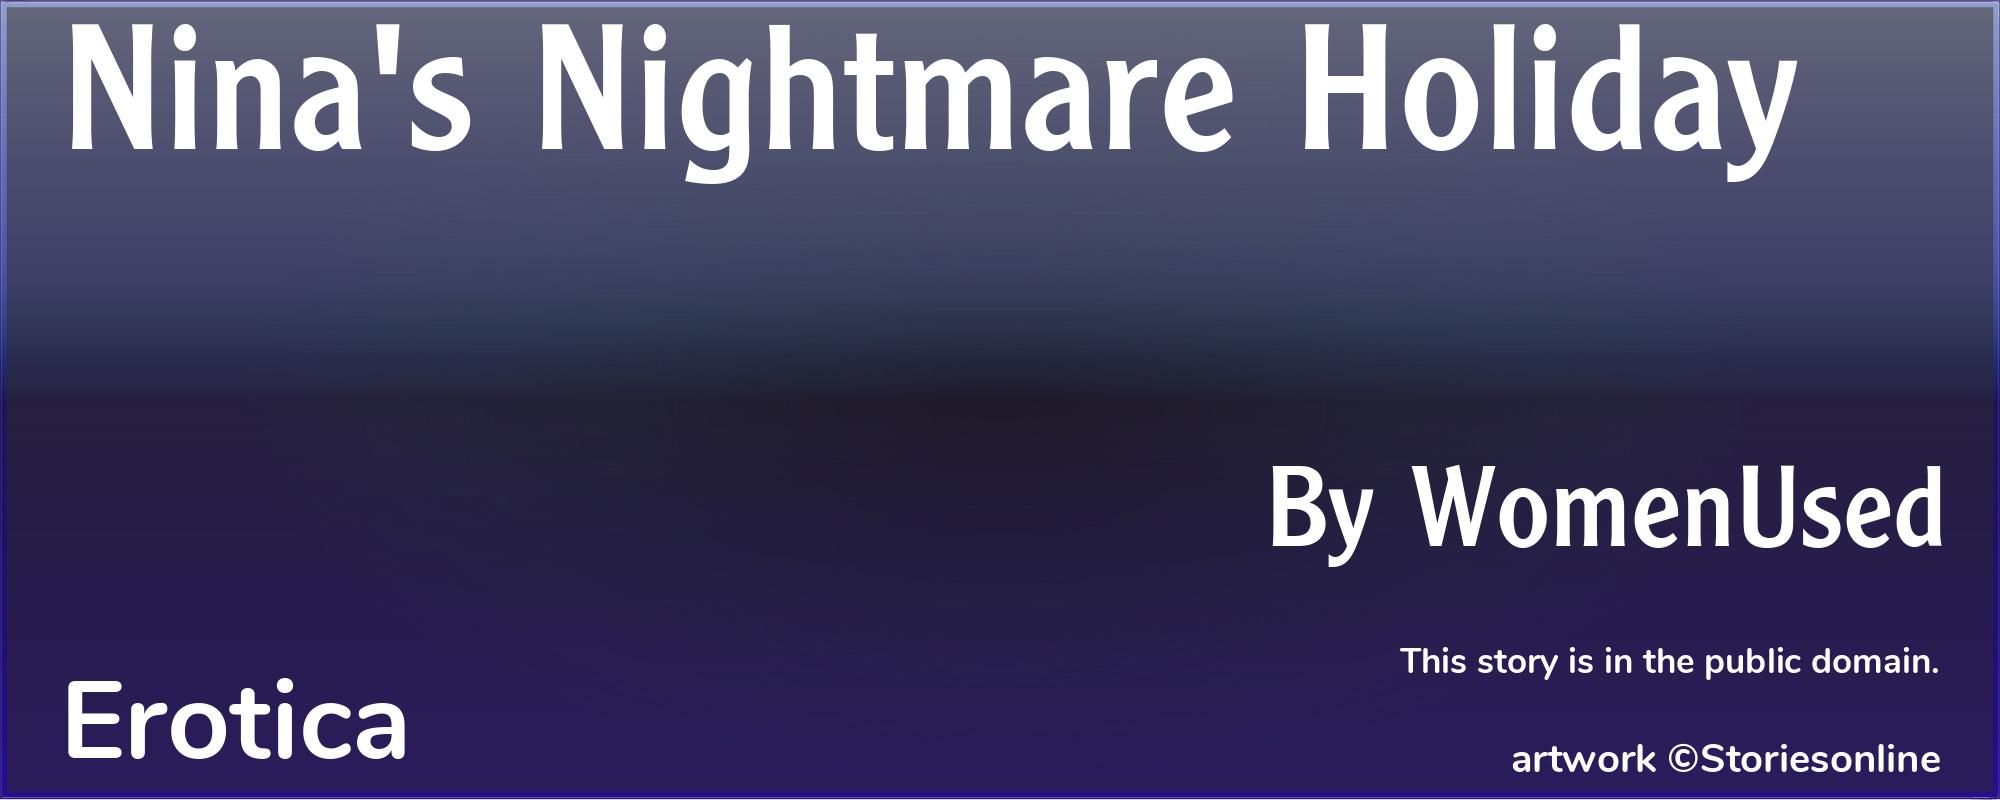 Nina's Nightmare Holiday - Cover